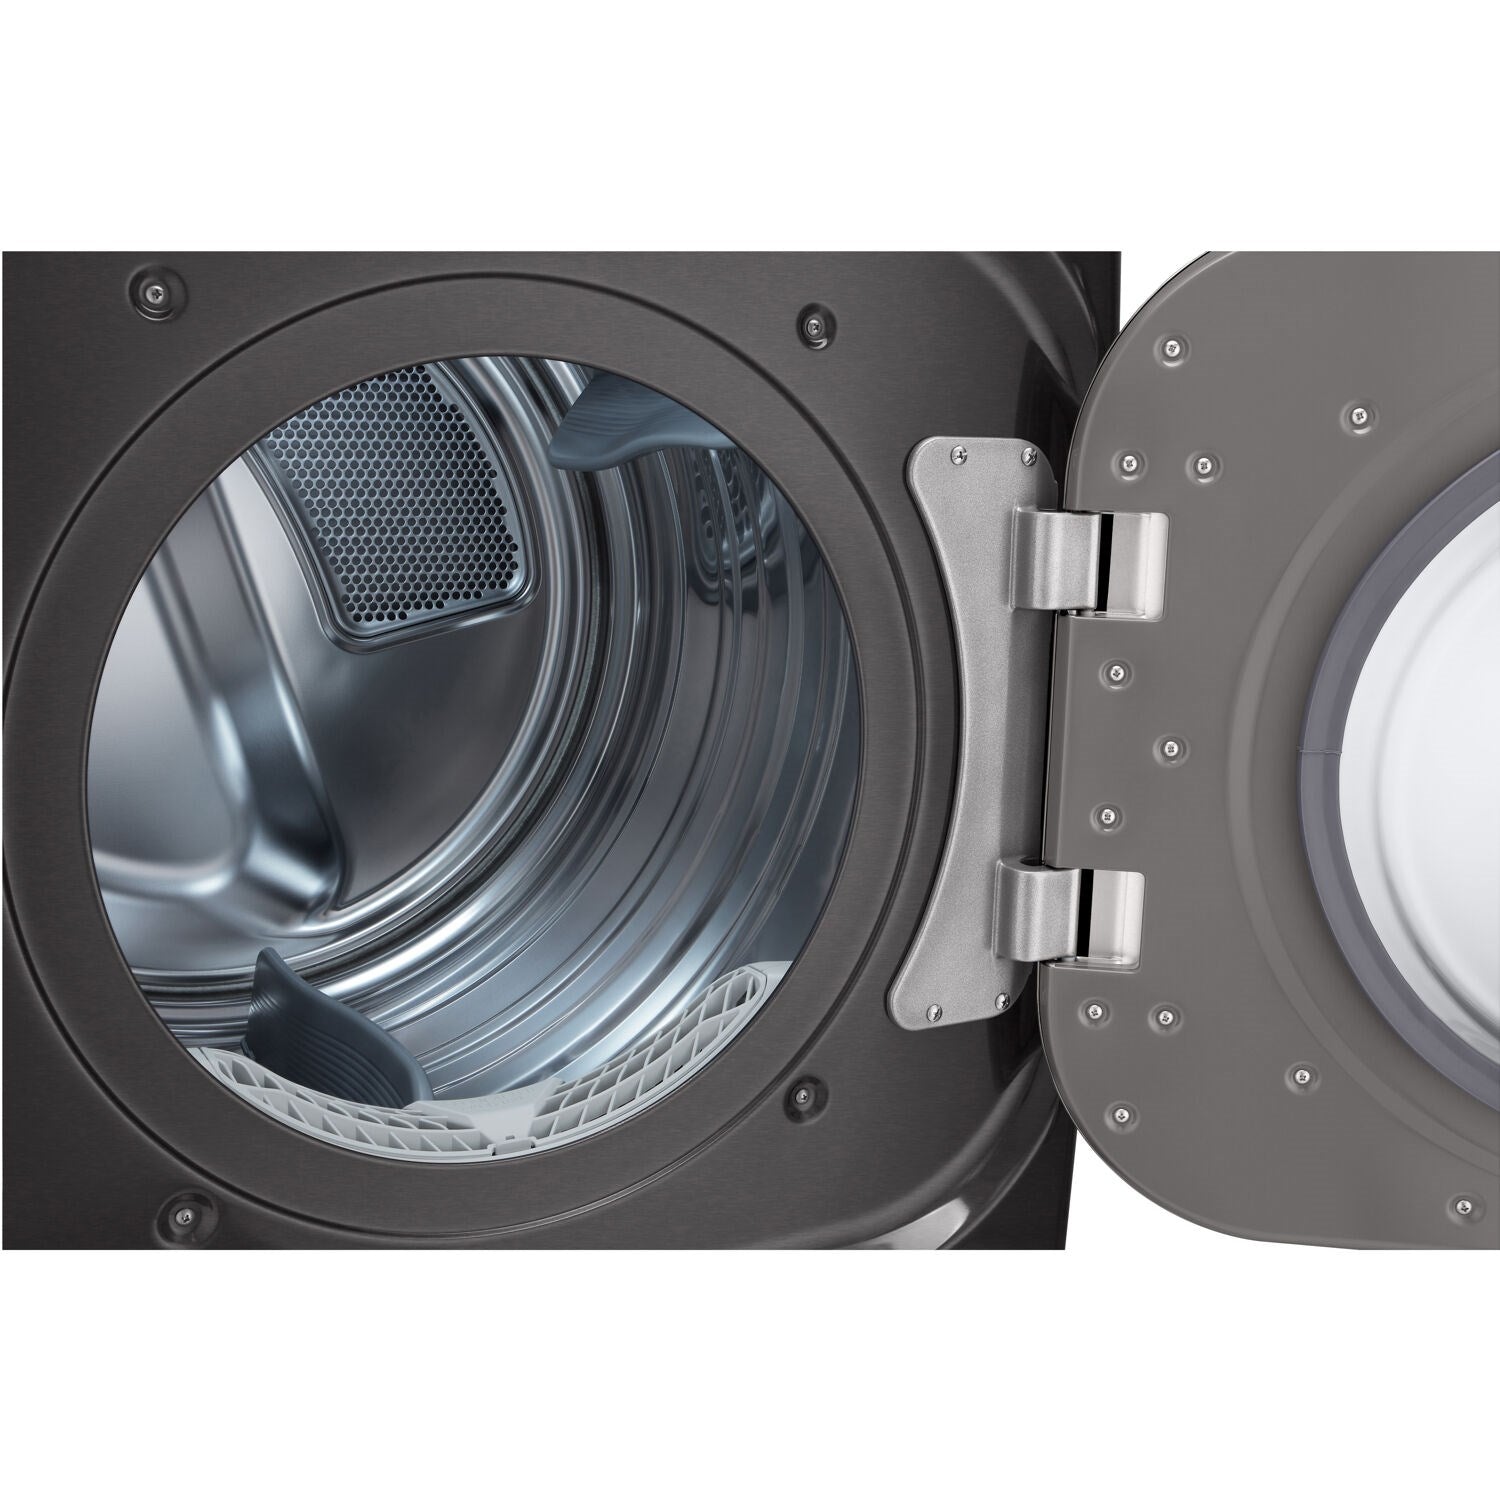 LG - 9.0 cu. ft. Mega Capacity Gas Dryer with with Sensor Dry, Turbo Steam in Black Steel | DLGX8901B